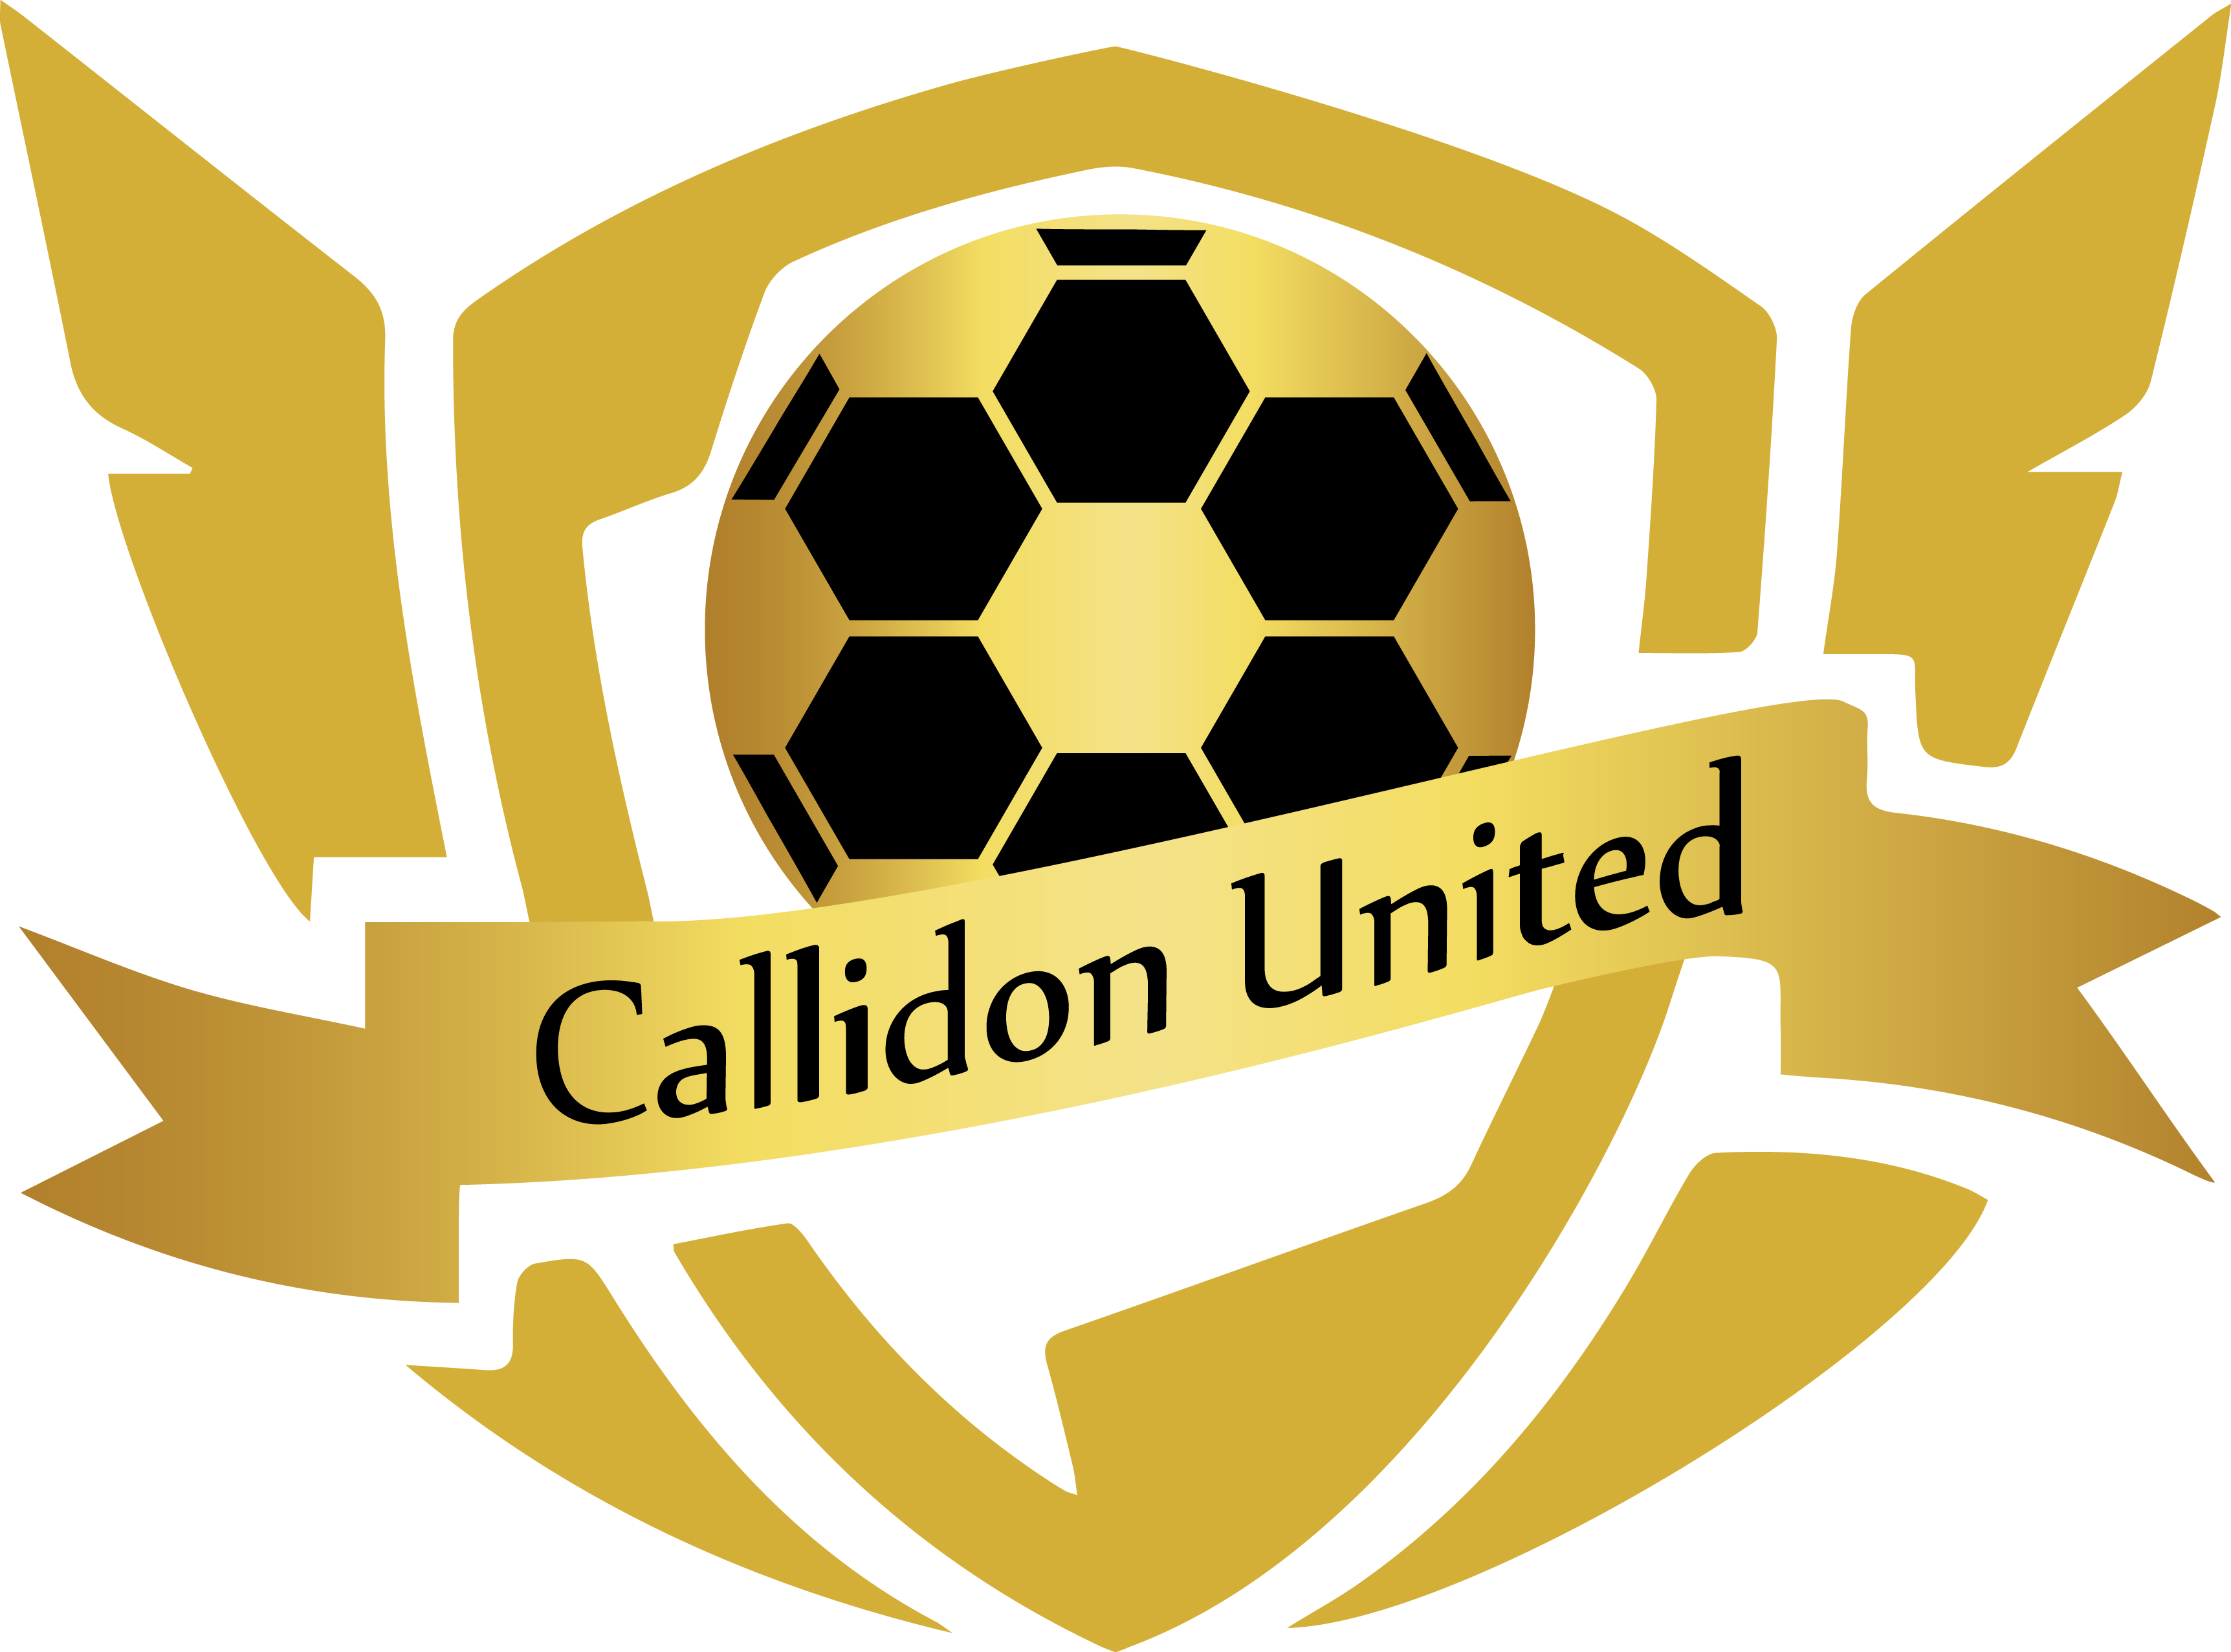 The Callidon United Club-logo